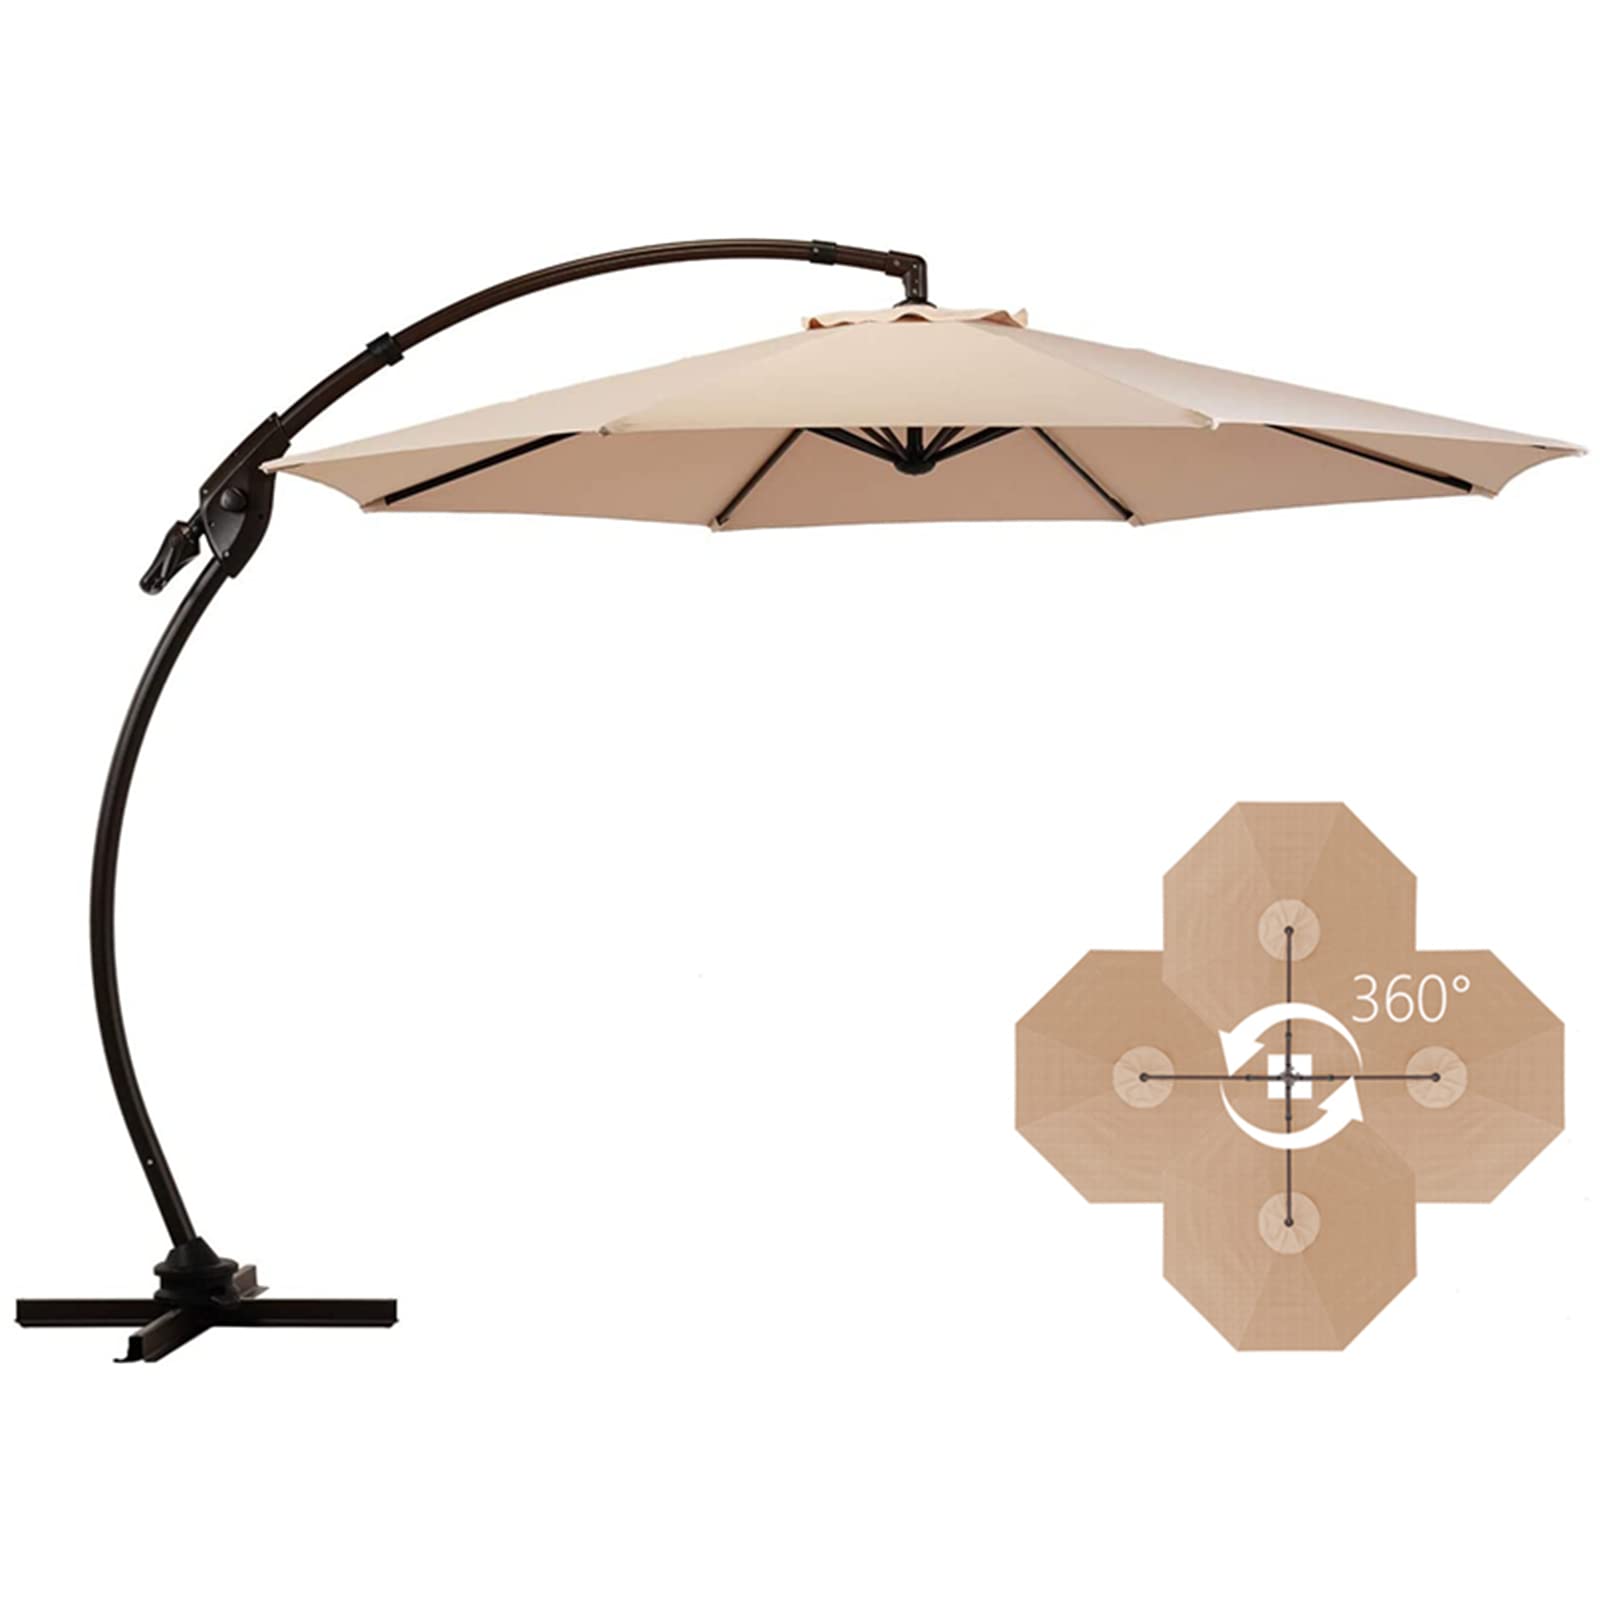 Deluxe NAPOLI Patio Umbrella, Curvy Aluminum Cantilever Umbrella with Base, Round Large Offset Umbrellas for Garden Deck Pool